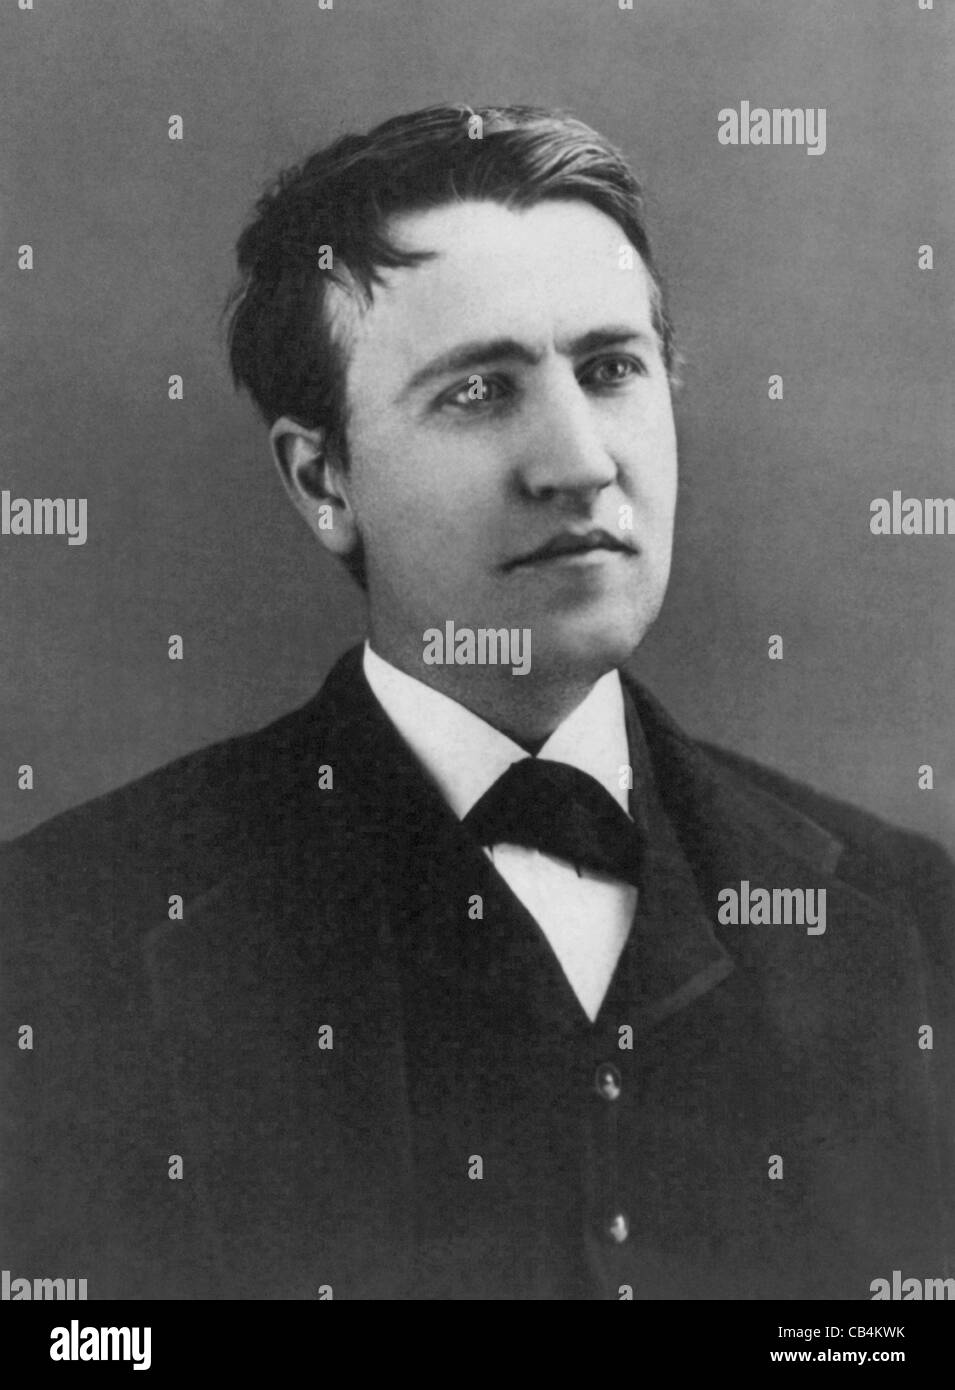 Vintage portrait photo of American inventor and businessman Thomas Alva Edison (1847 – 1931). Photo circa 1878 by L C Handy. Stock Photo